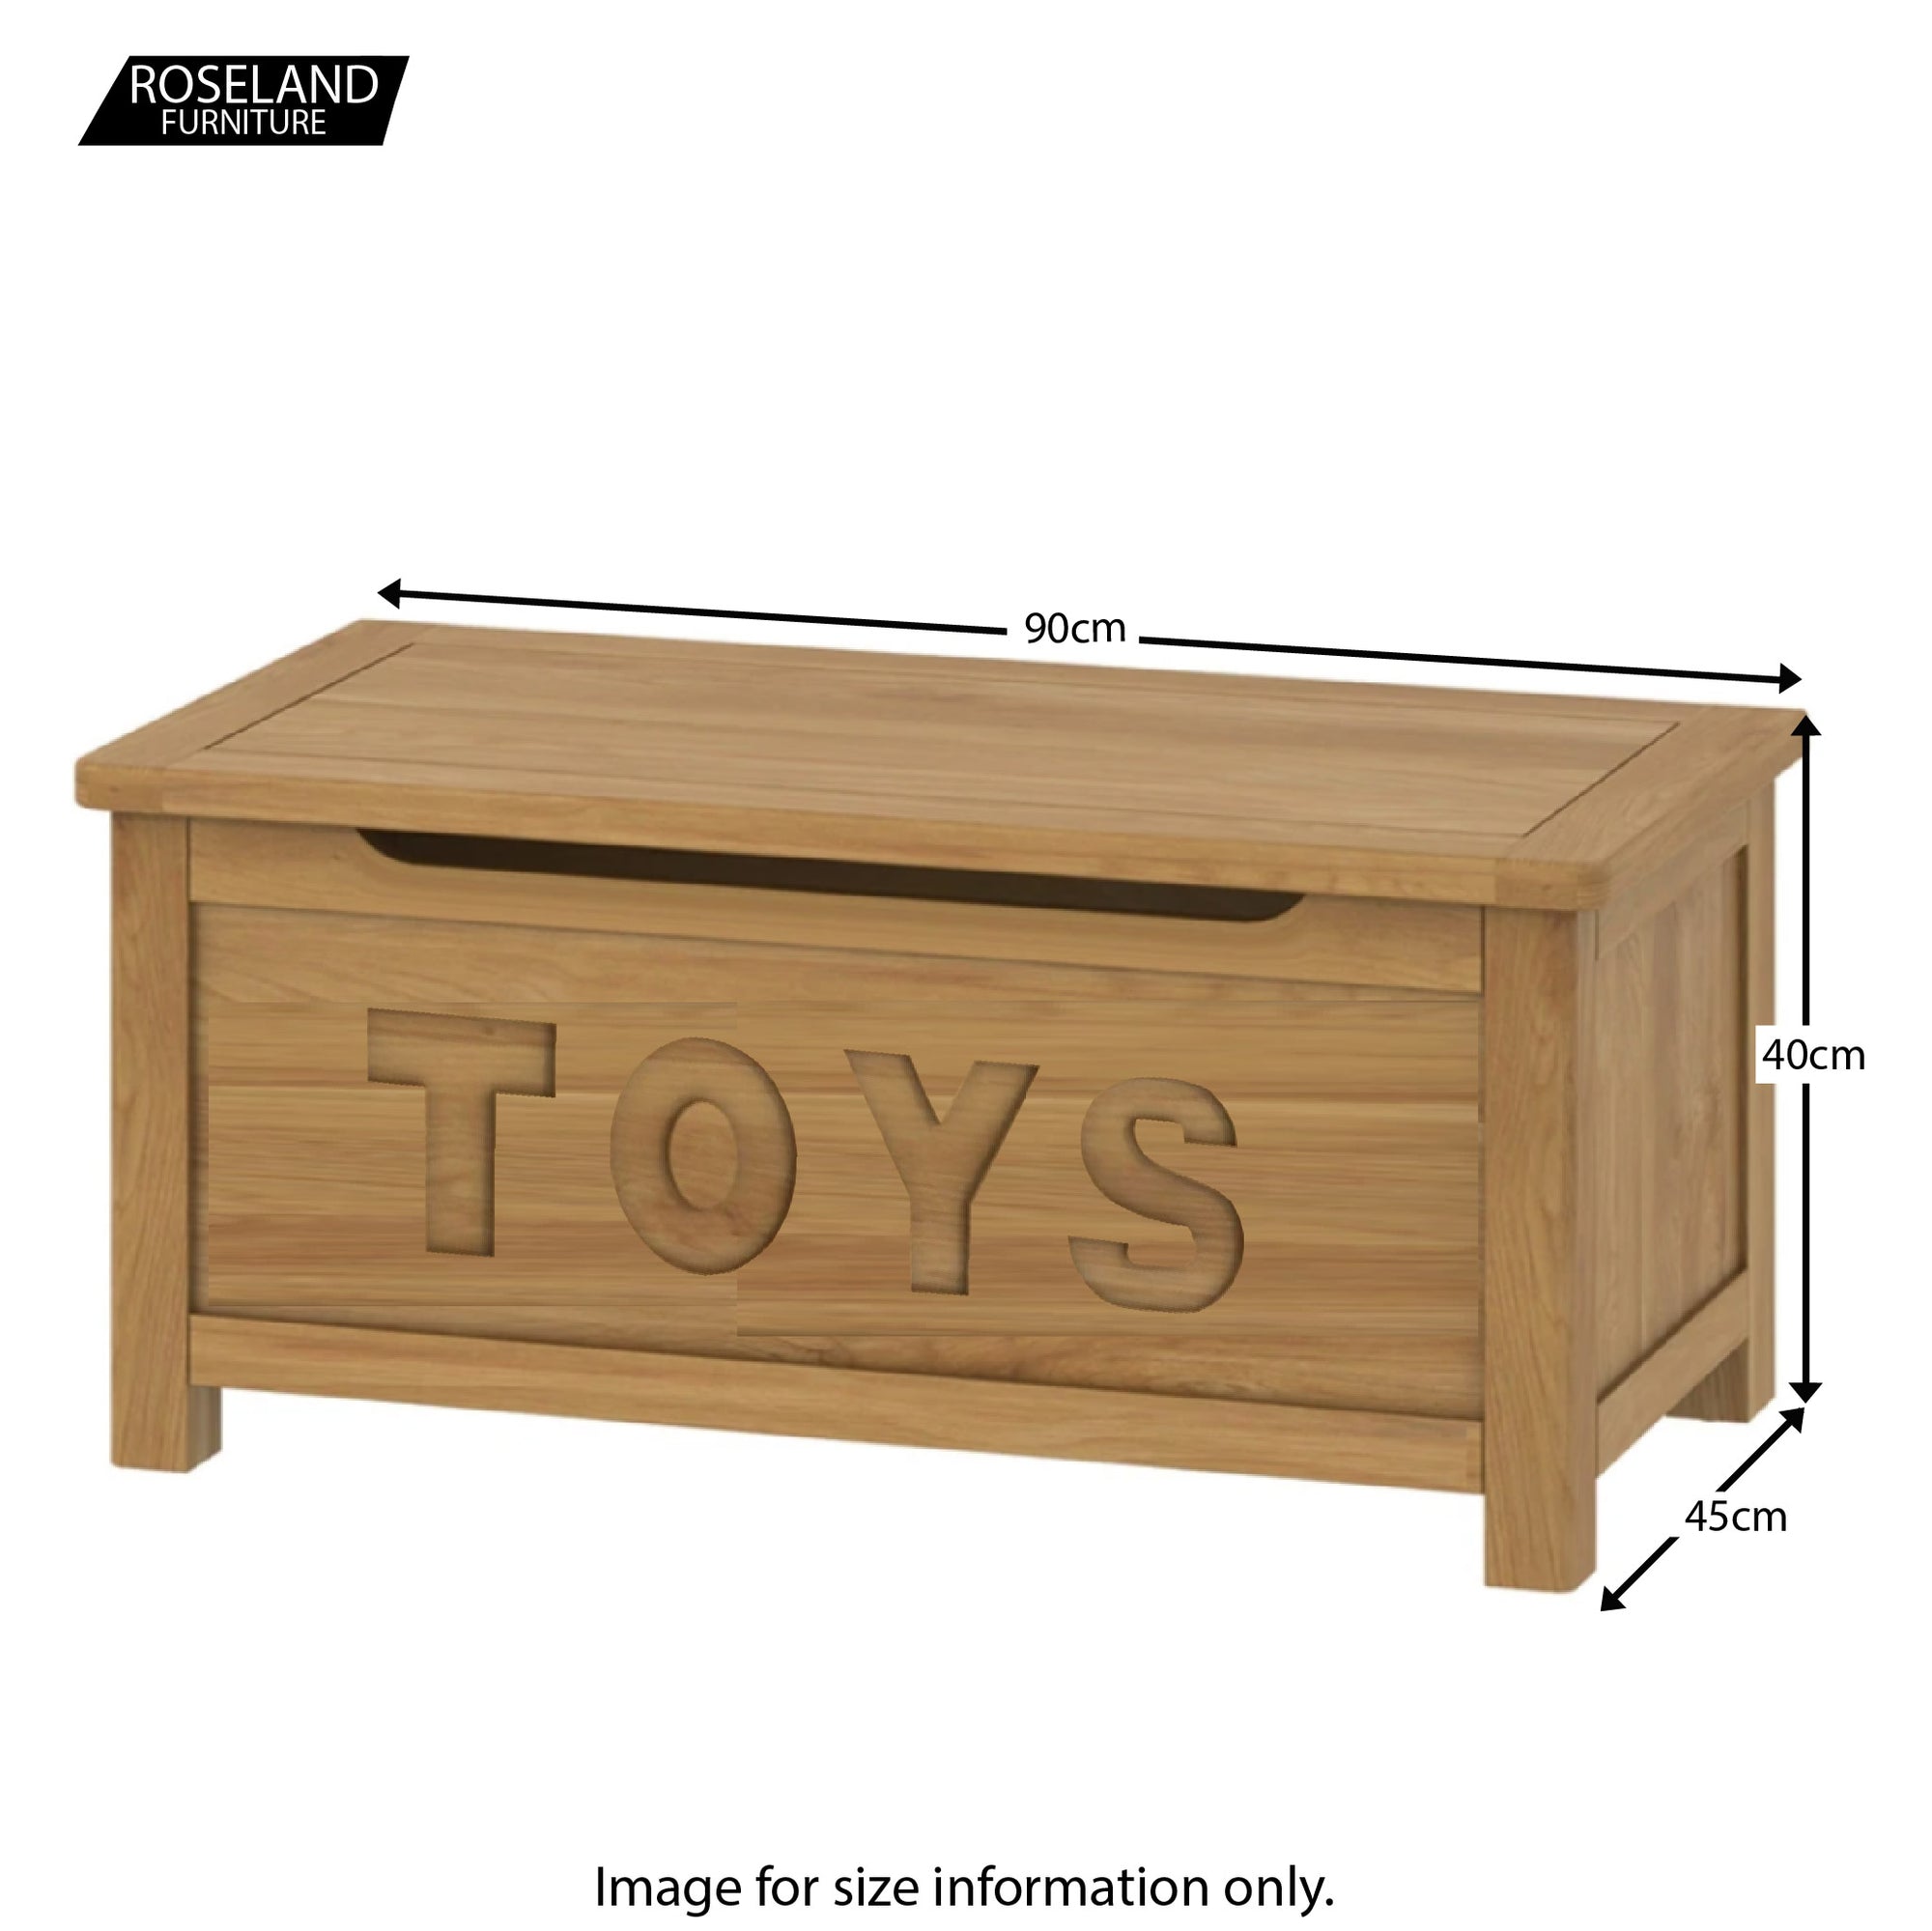 toy box size